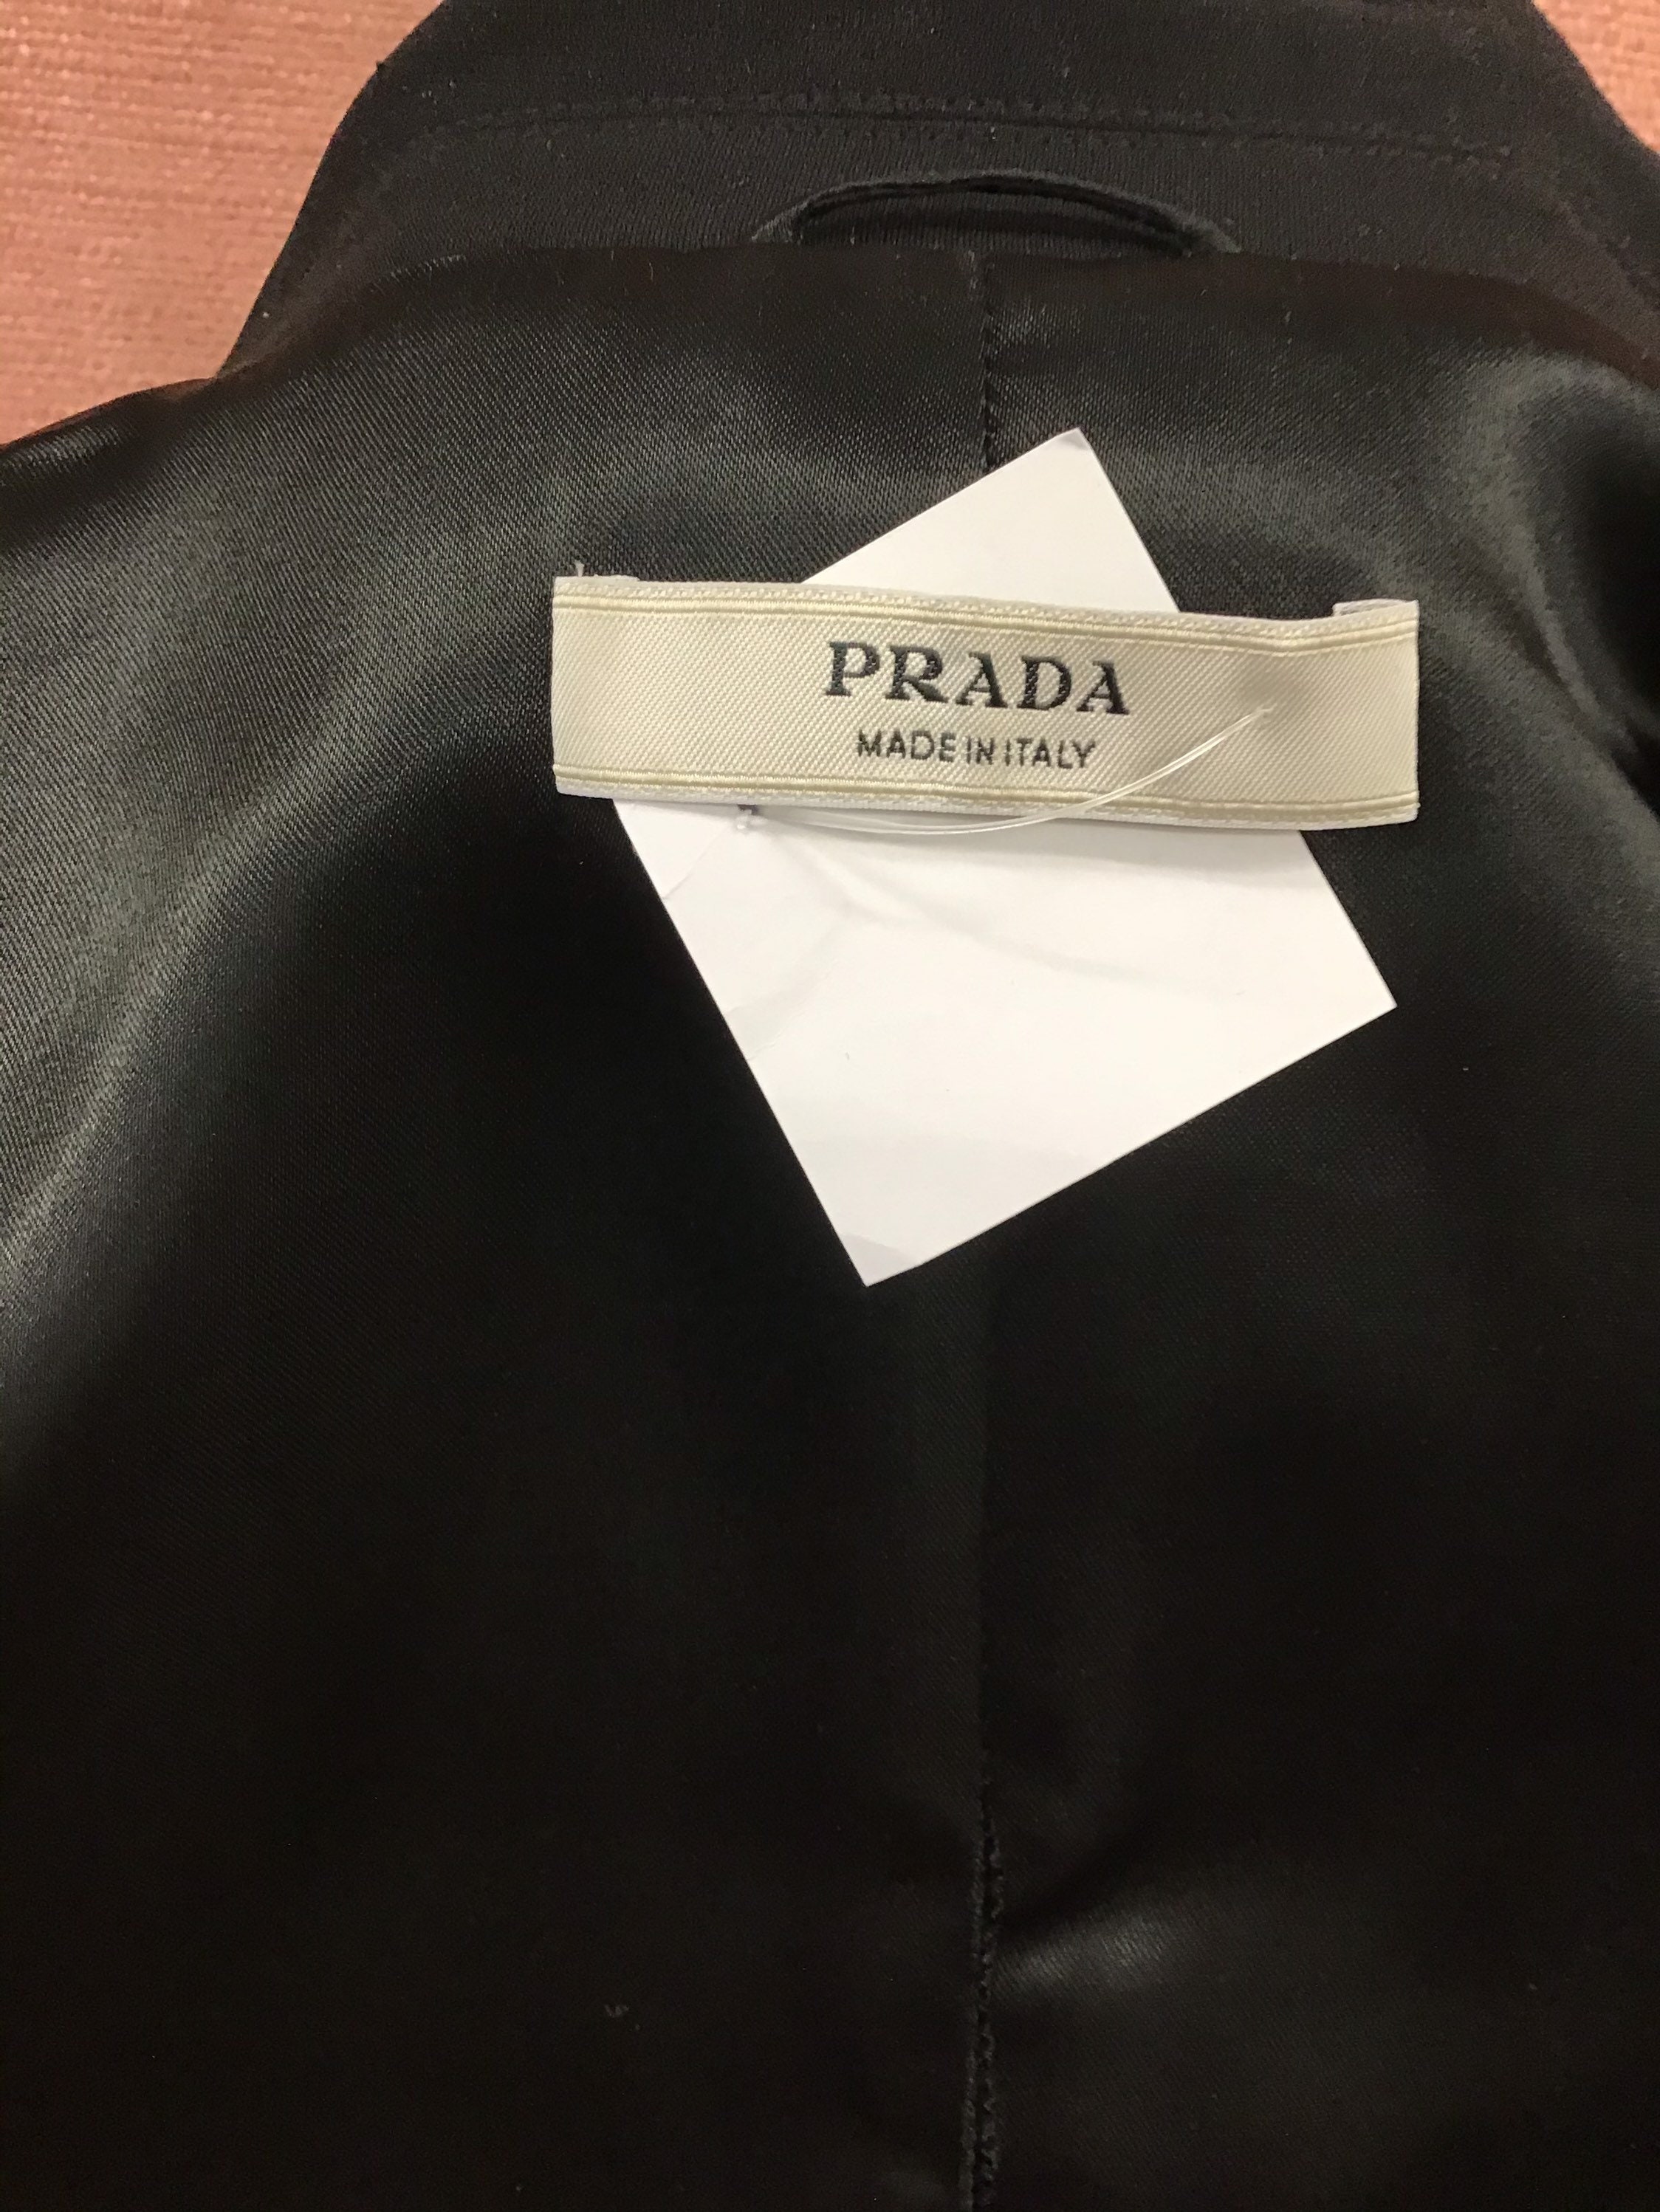 Authentic vintage ladies Prada black tuxedo style blazer | Etsy